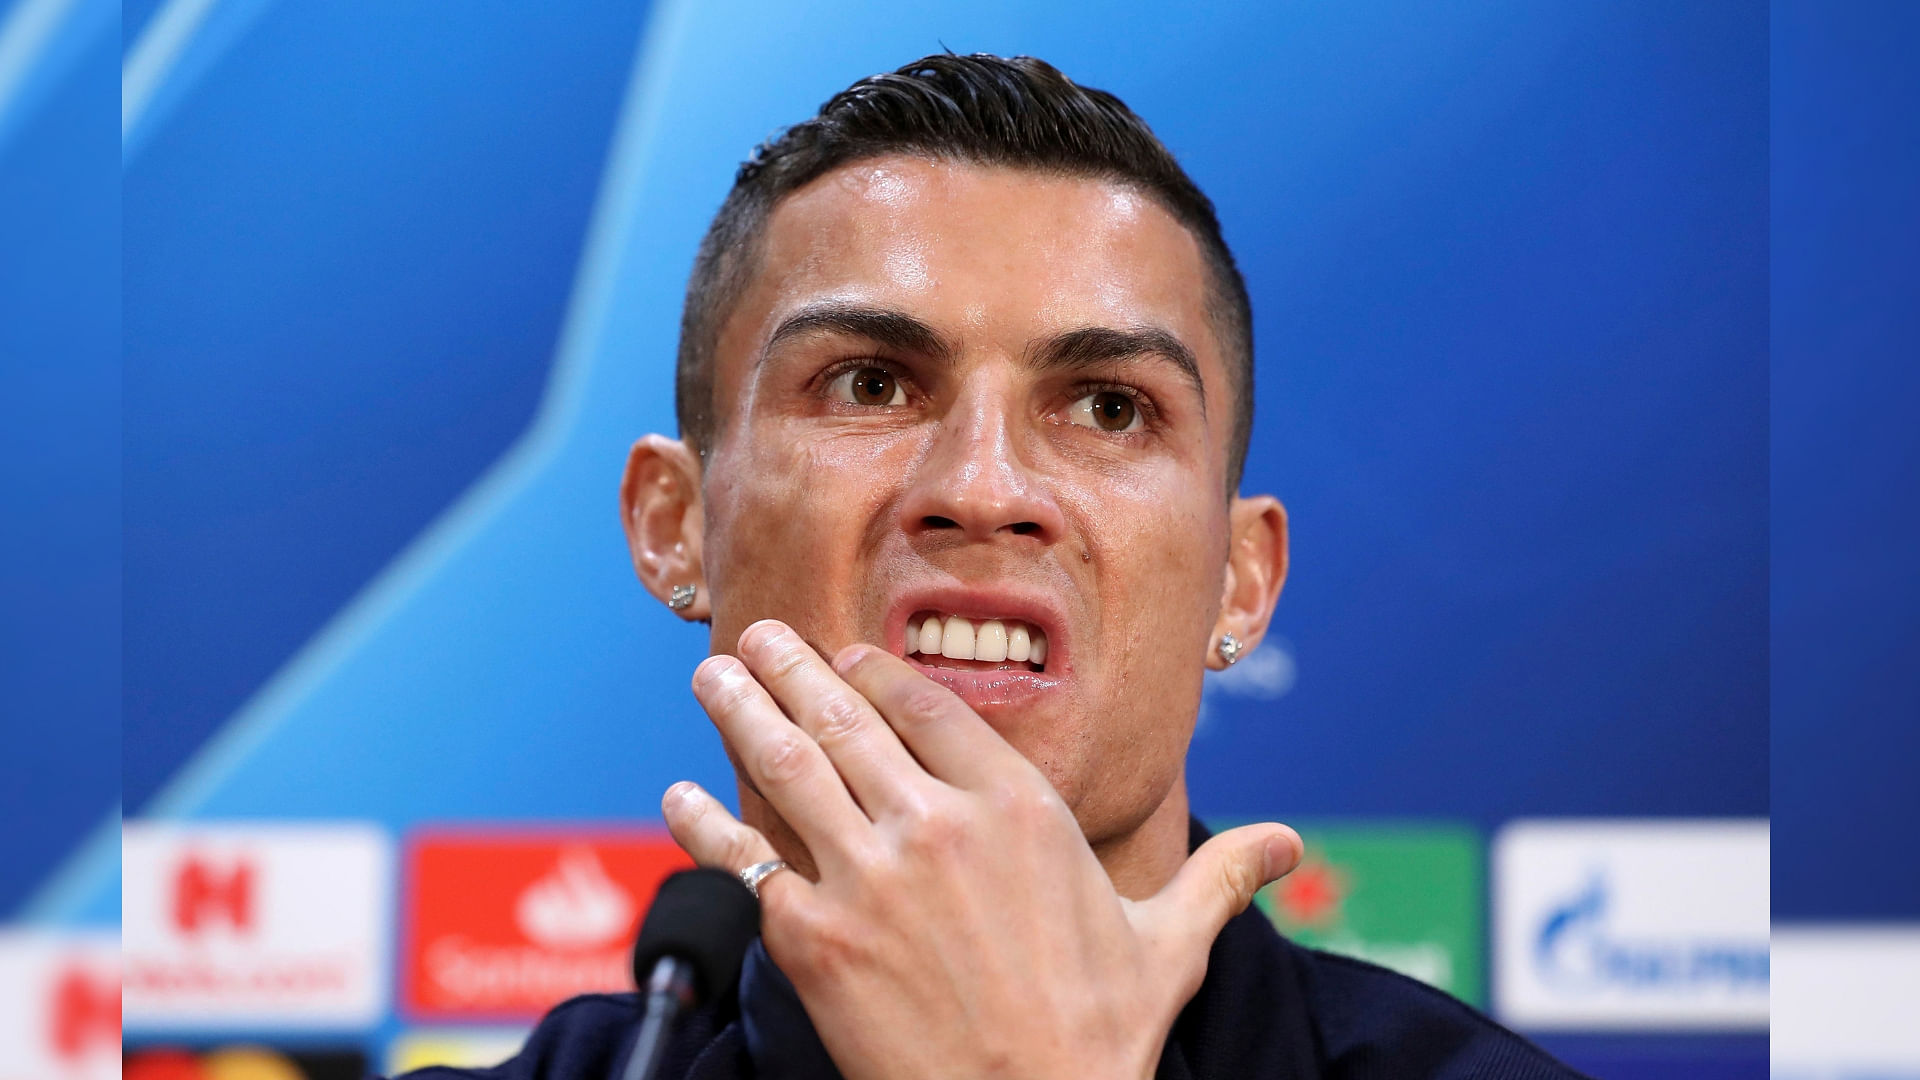 Cristiano Ronaldo defended himself against the rape allegation.